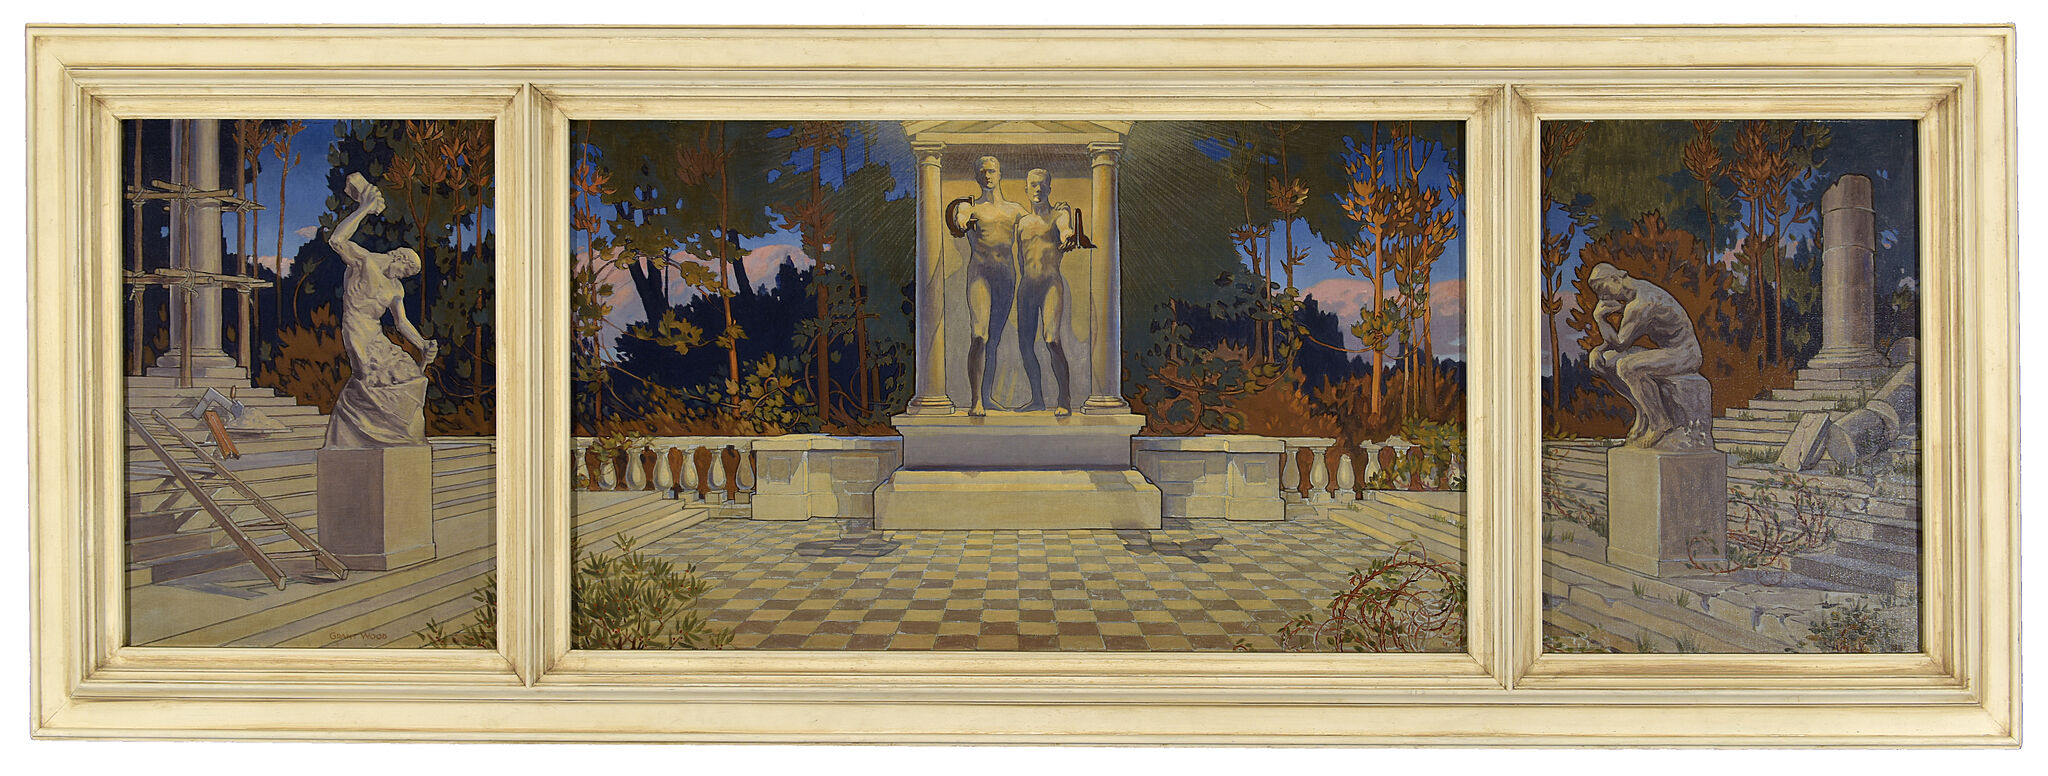 Three paneled painting of figure sculptures 